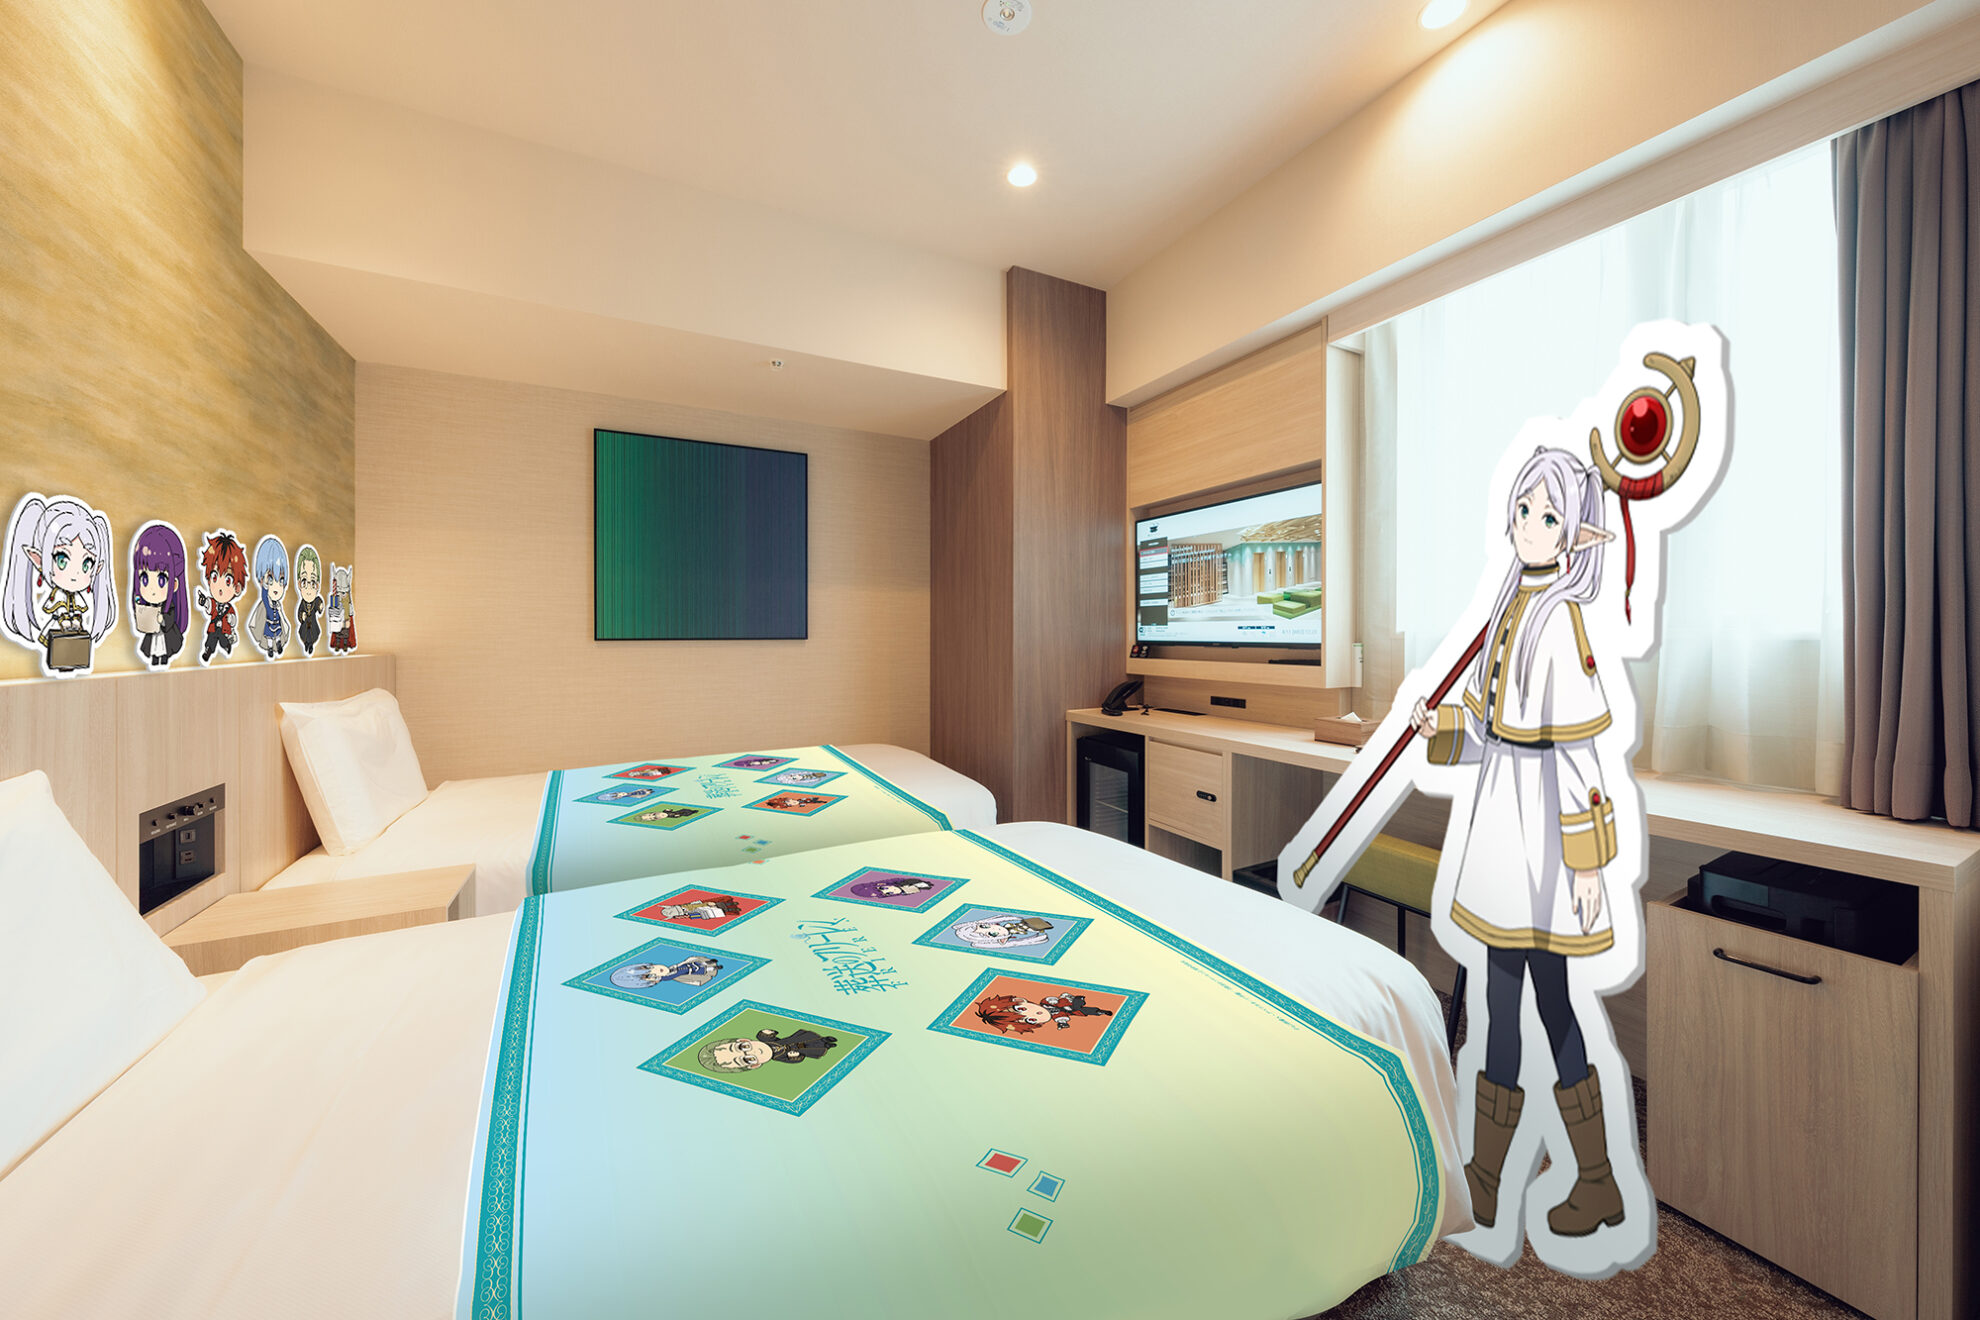 EJ Anime Hotel Announces Anime-Themed Rooms - GamerBraves